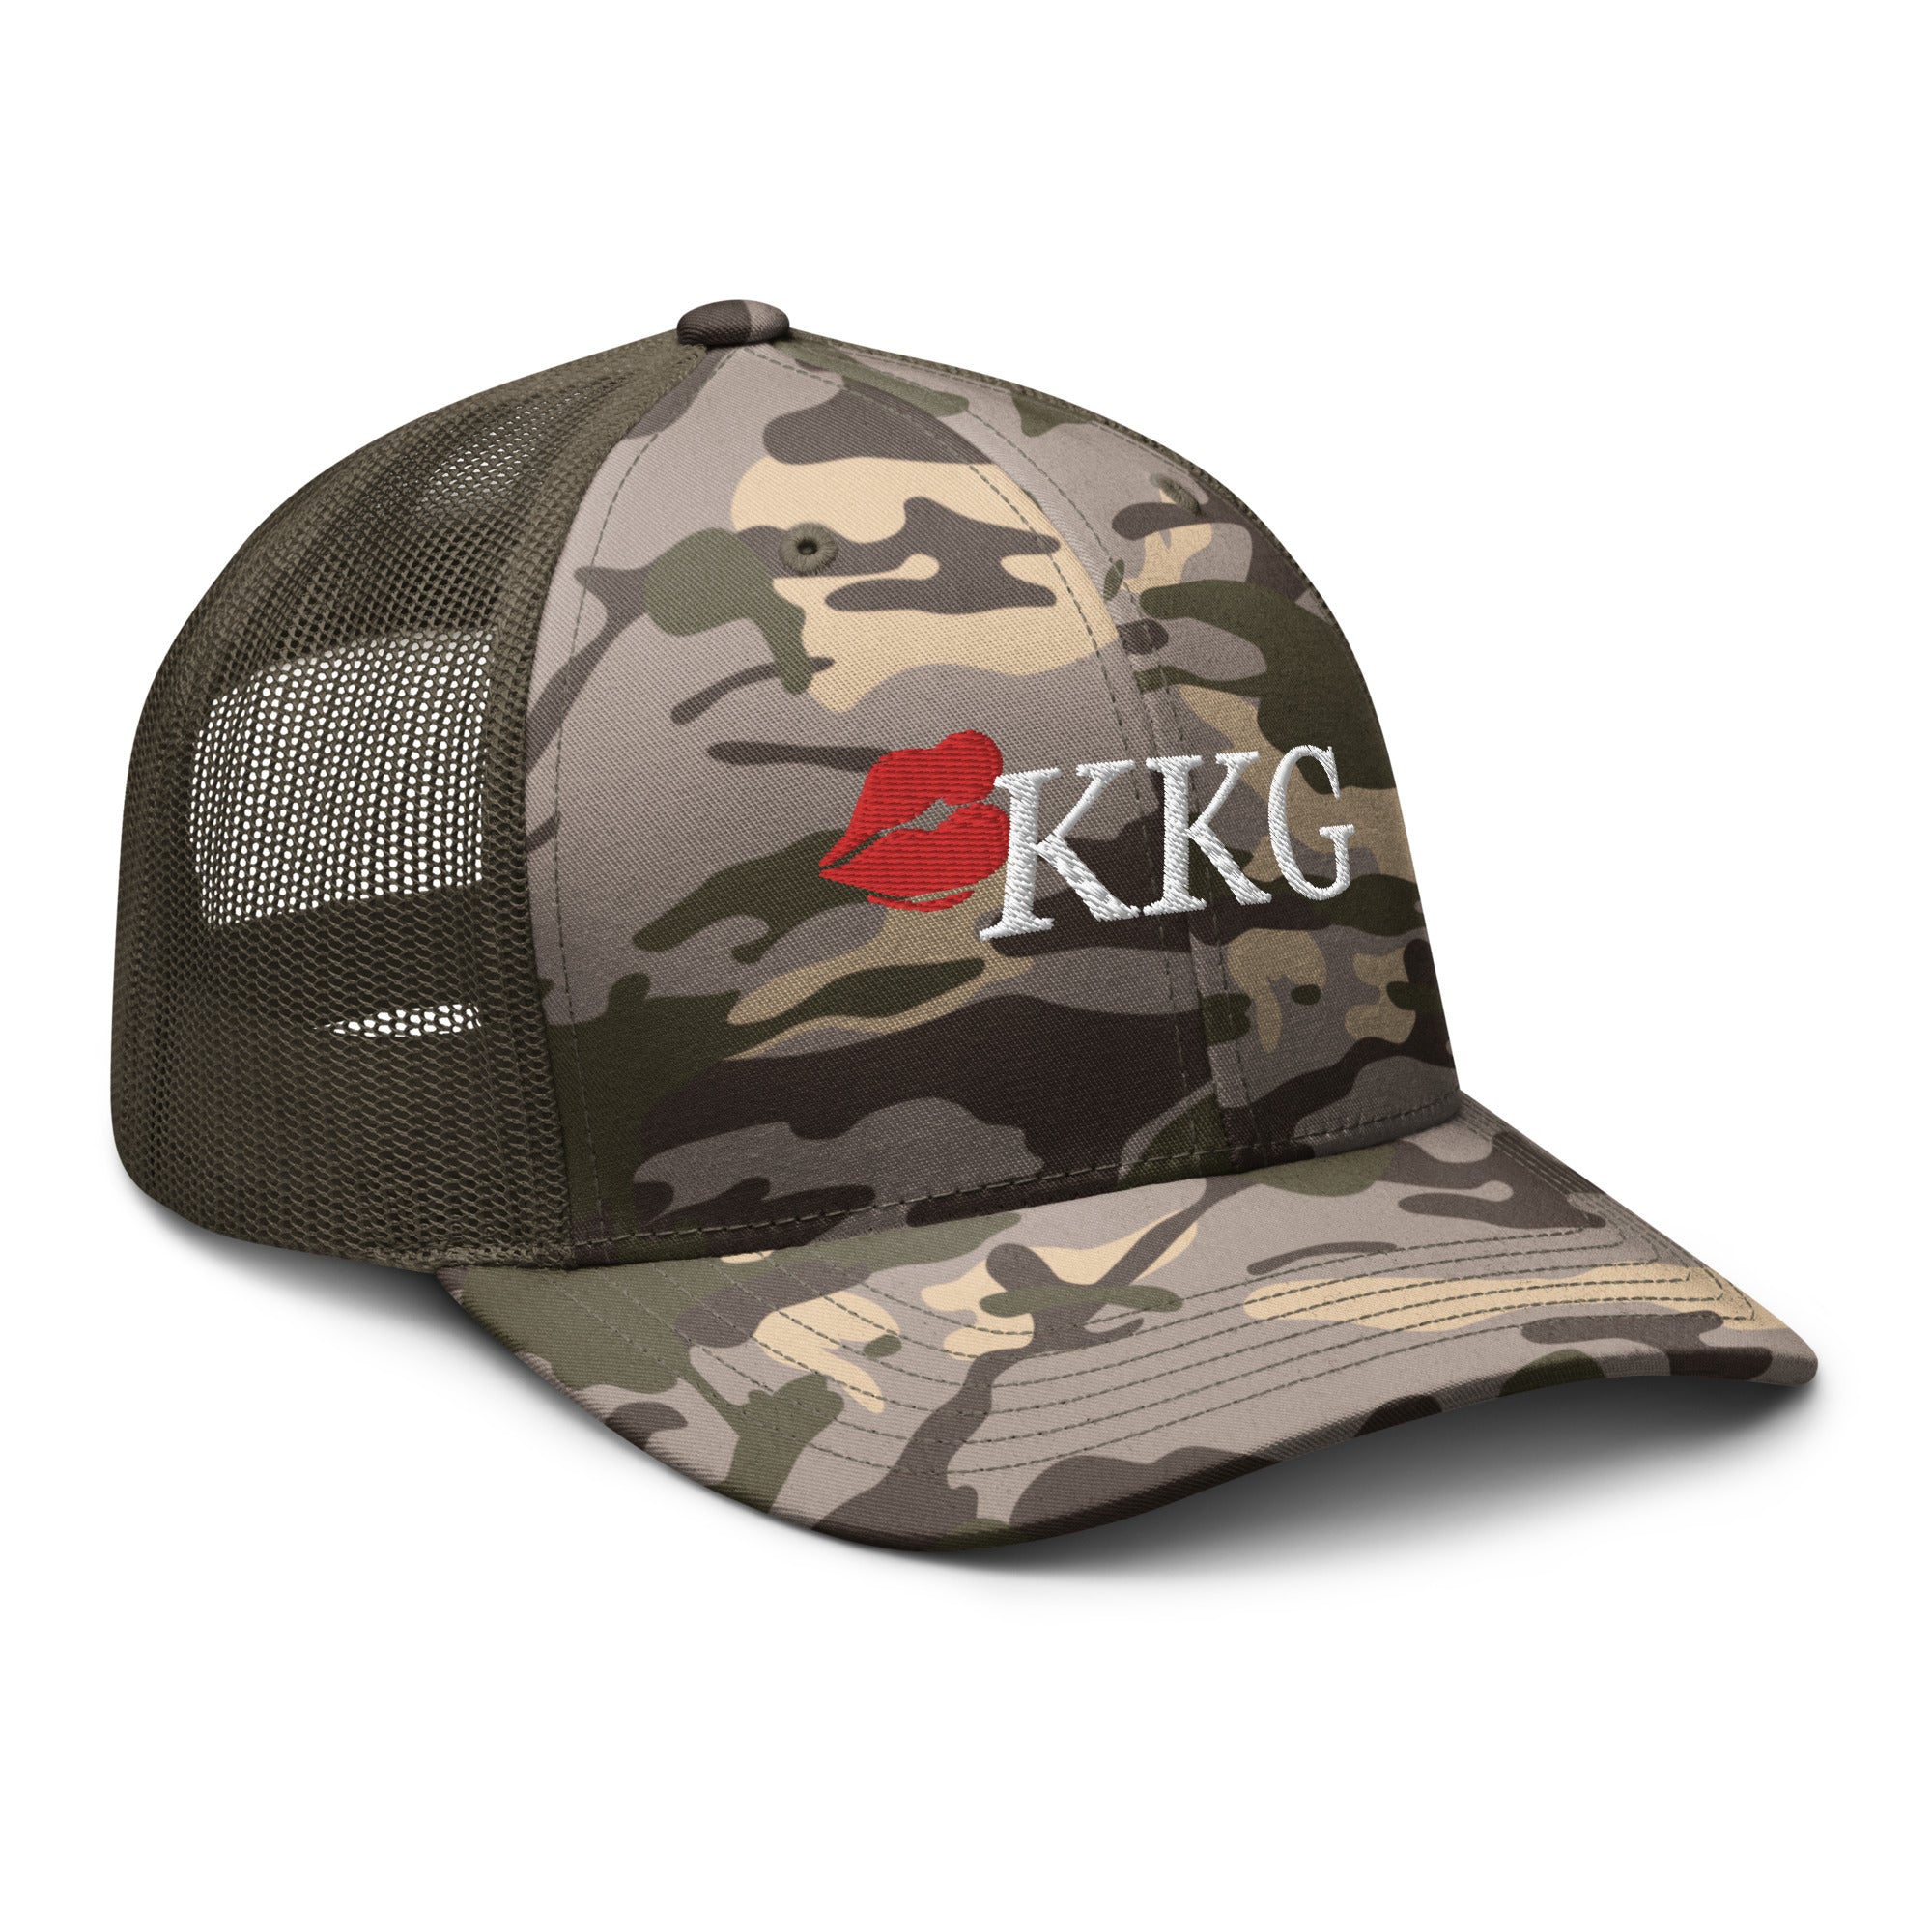 Kappa Kappa Gamma Camouflage trucker hat